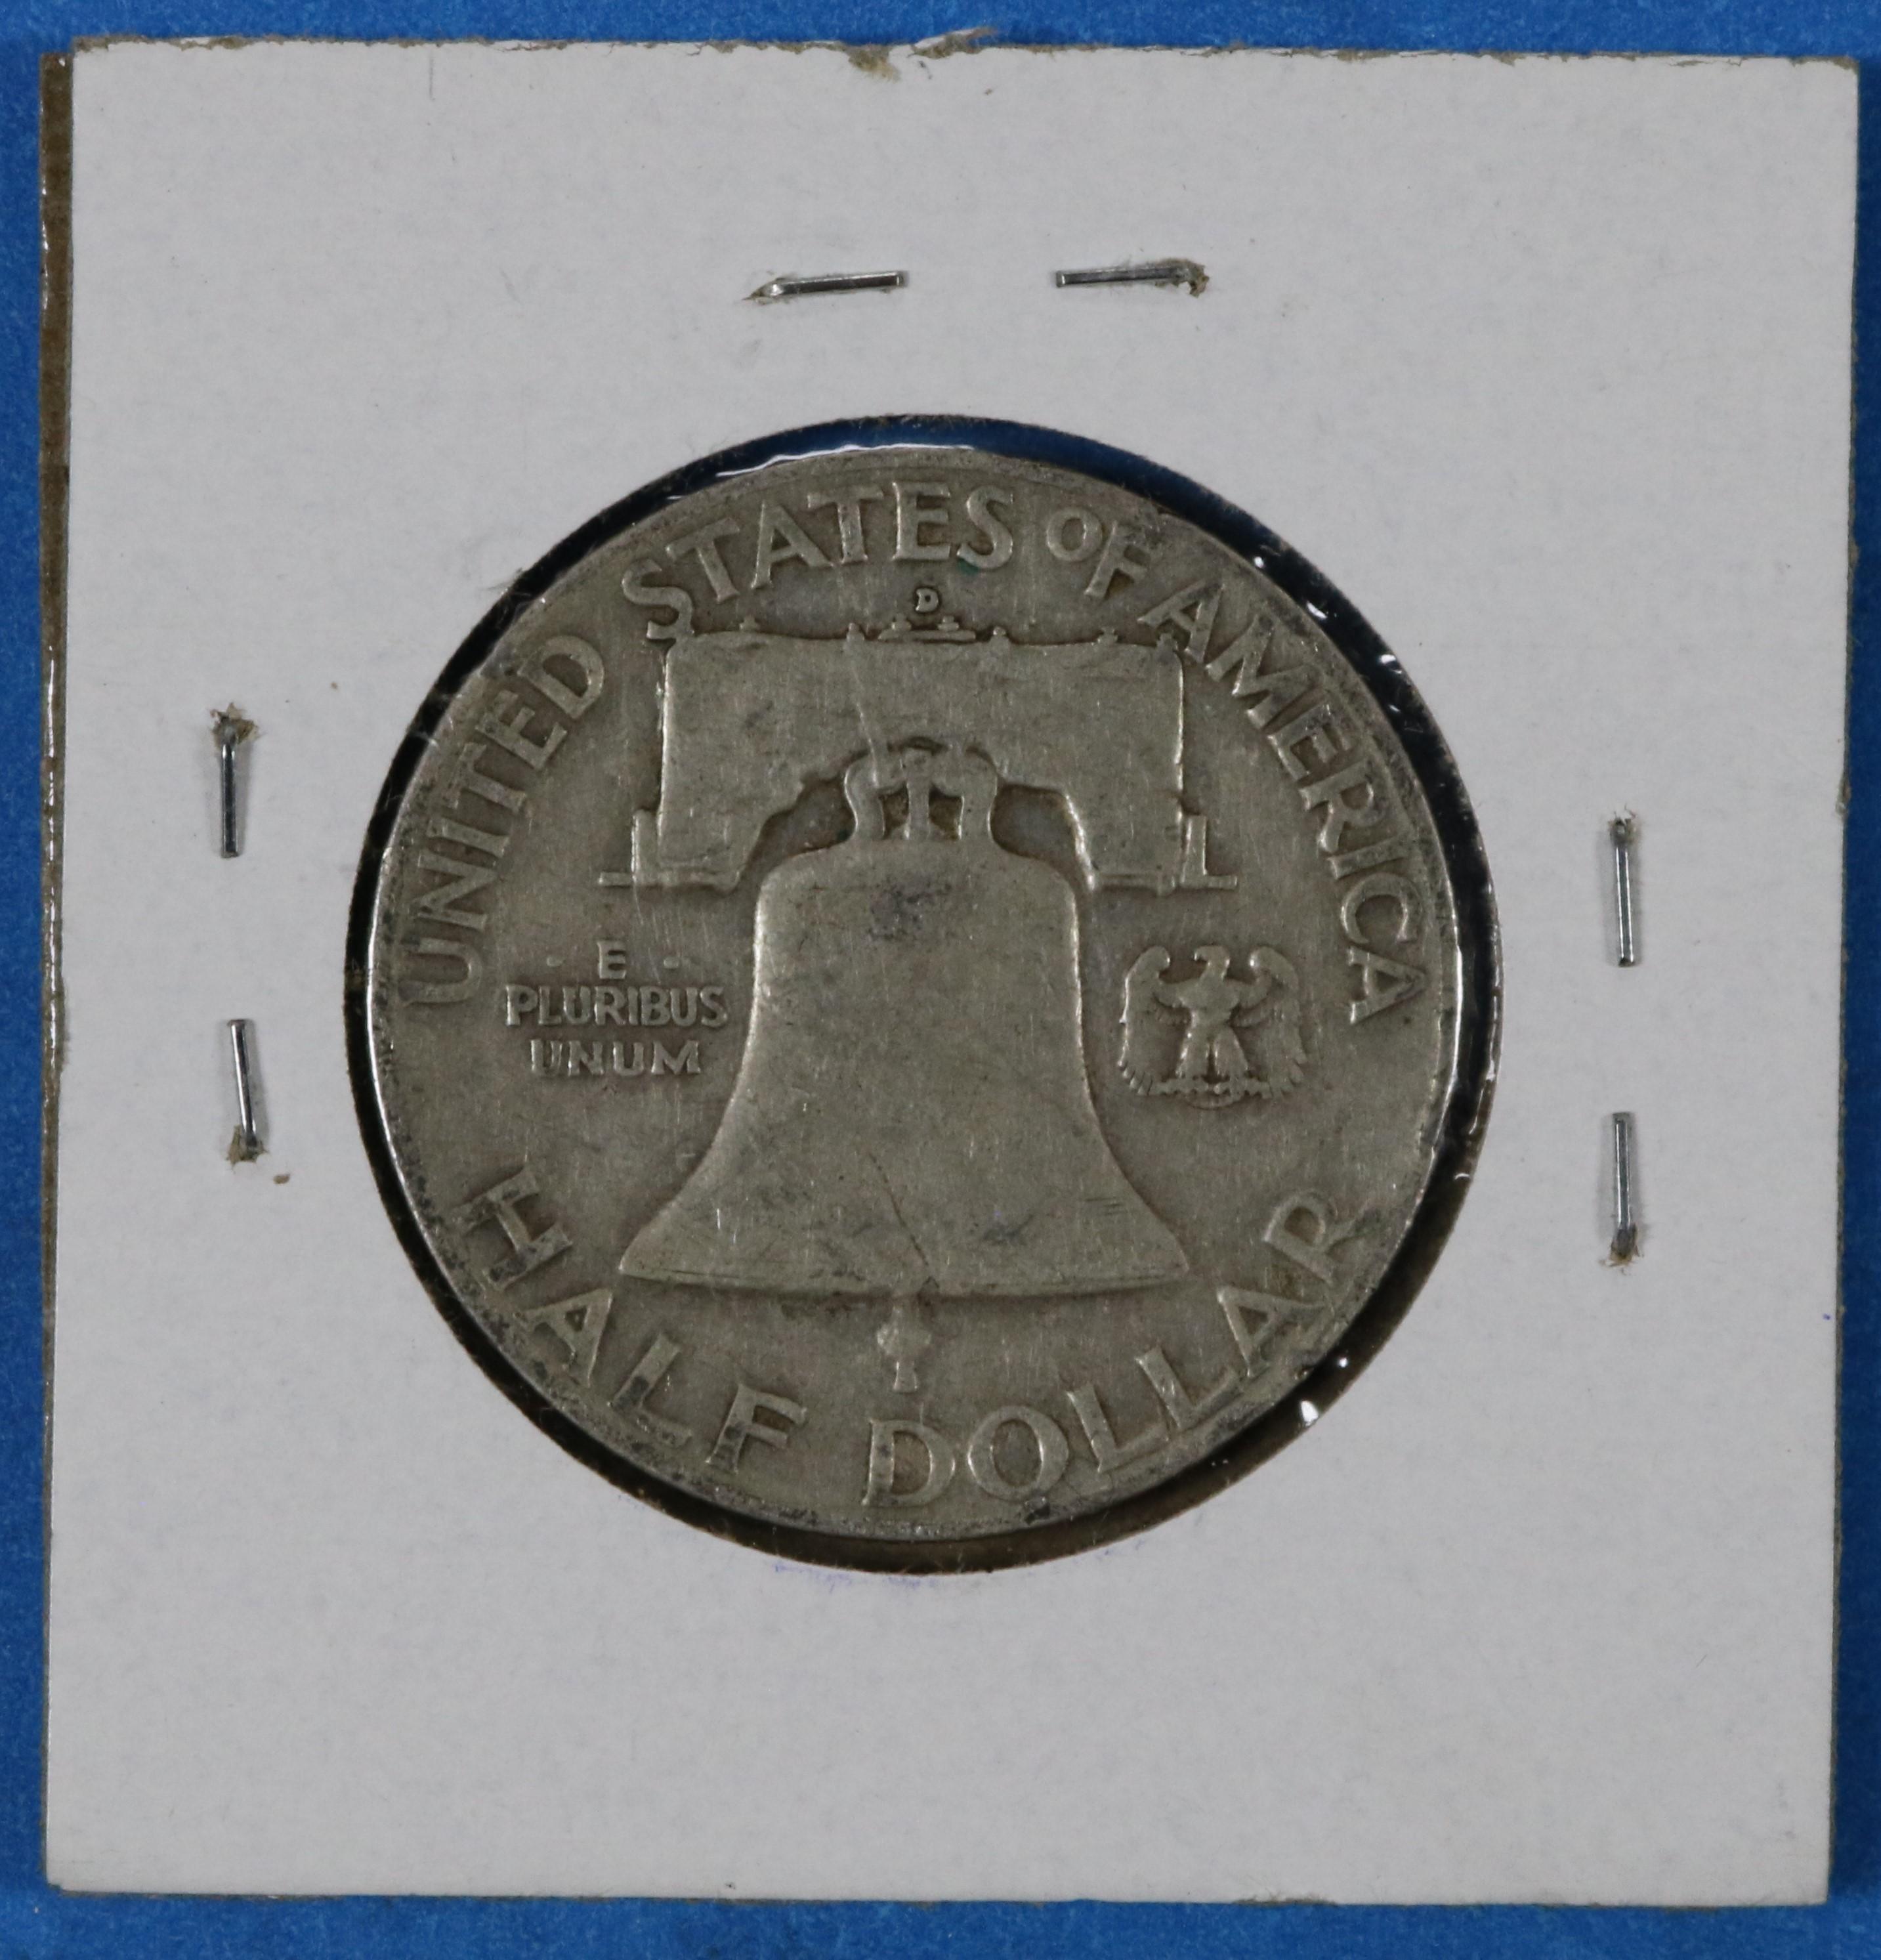 1949 D Franklin Half Silver Dollar